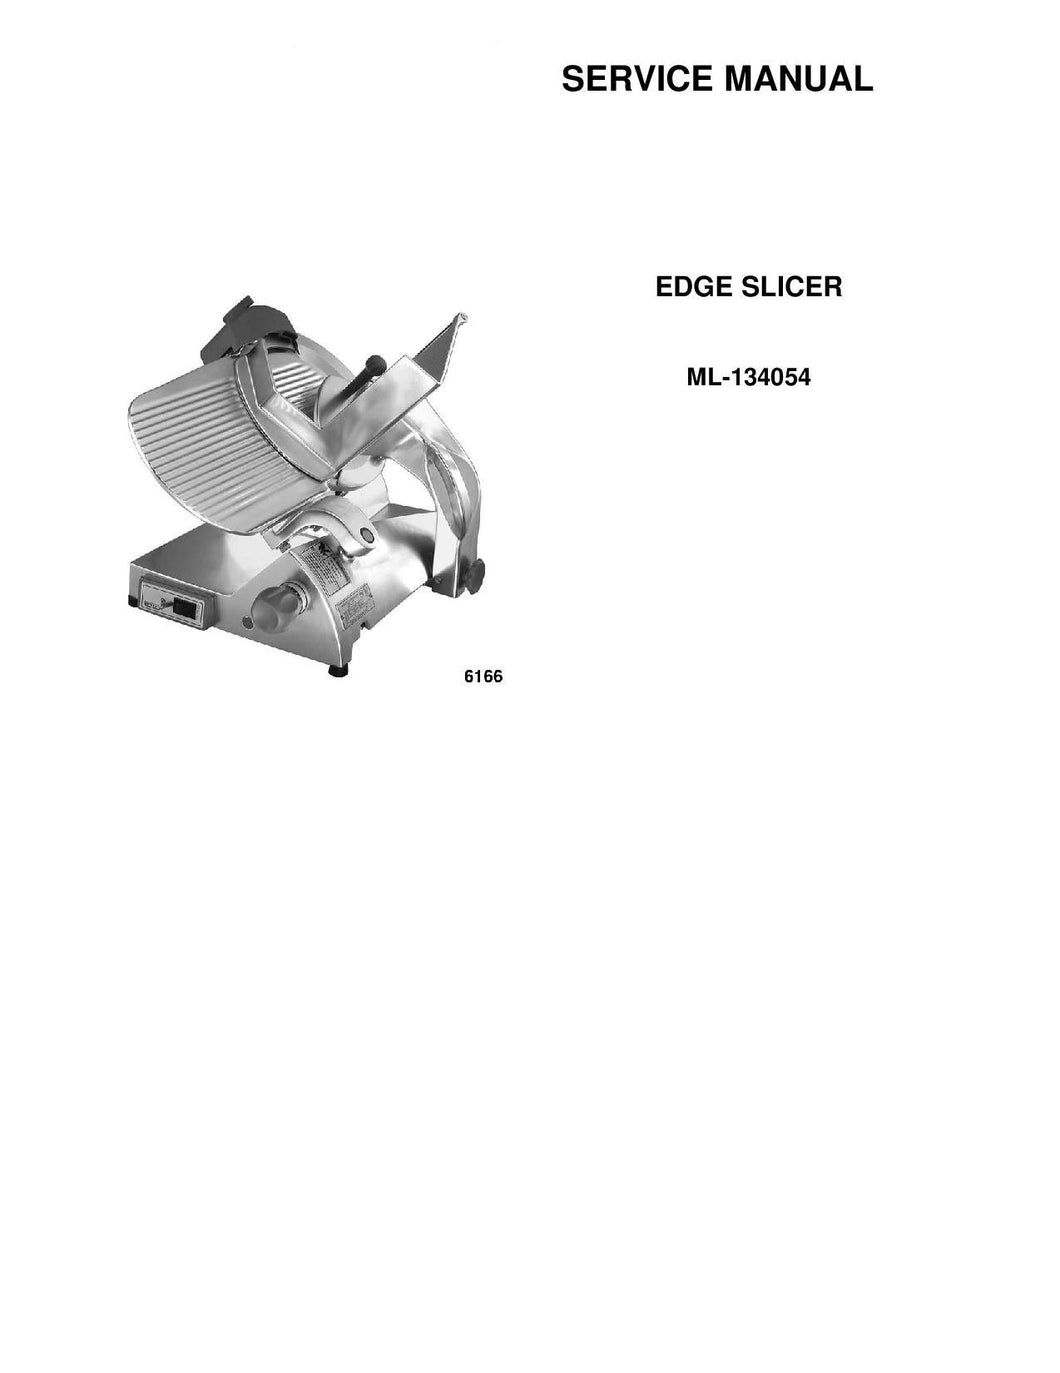 HOBART MODEL EDGE SLICER SERVICE, TECHNICAL AND REPAIR MANUALS PDF